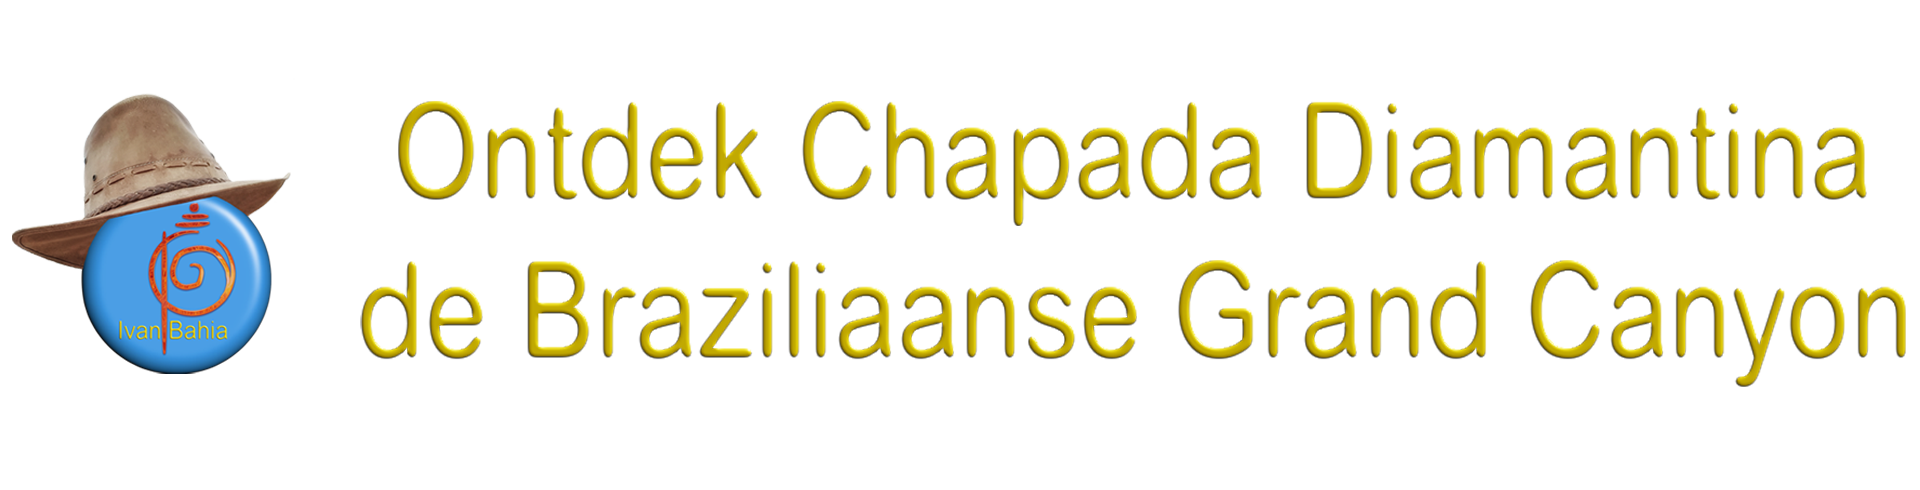 logo Brazilian Grand Canyon Chapada Diamantina travels & tour guide Ivan Bahia